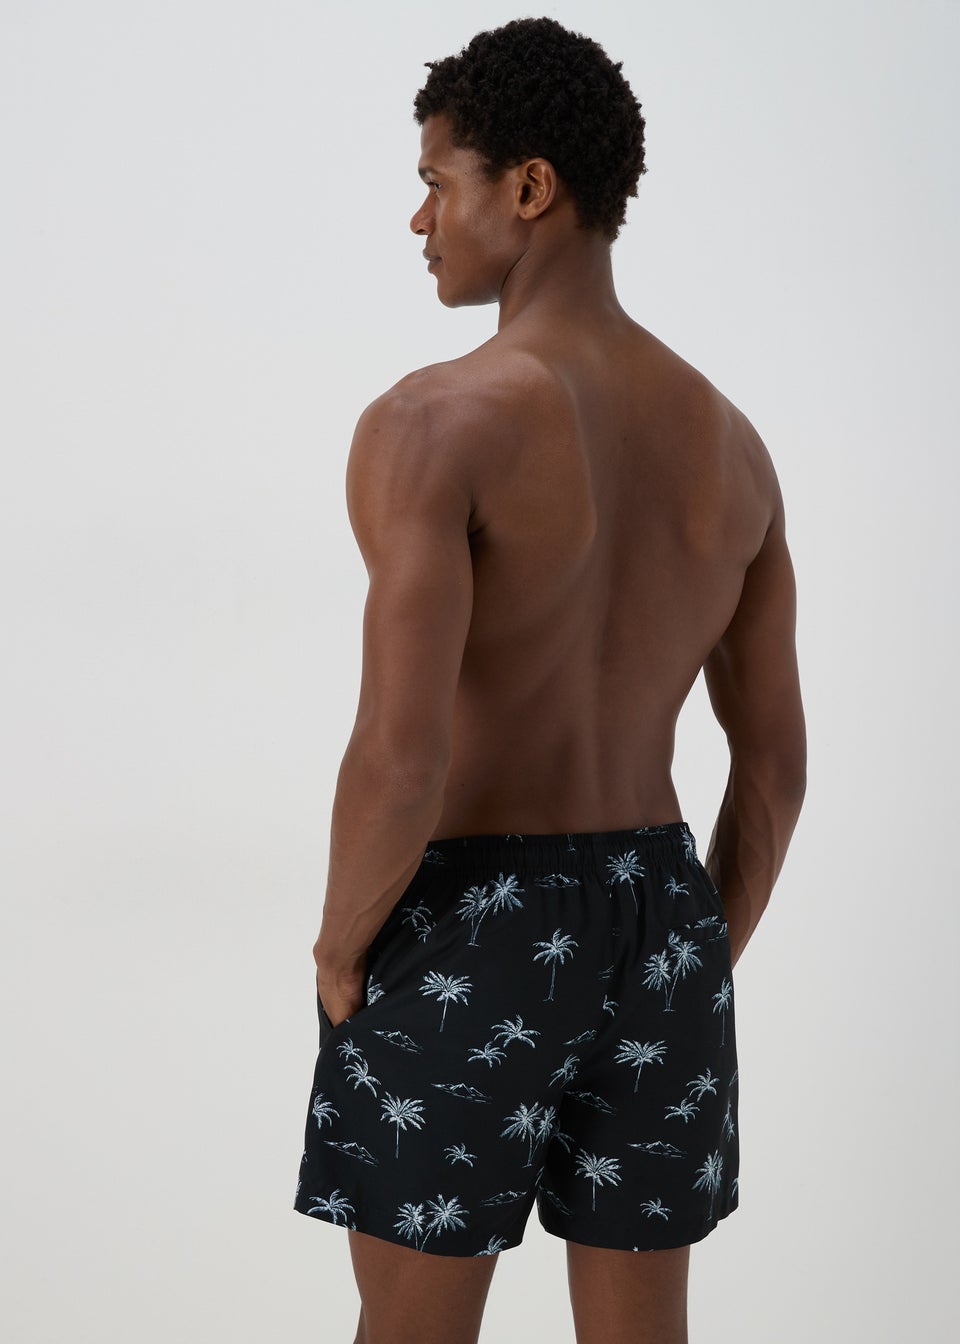 Black Palm Print Swim Shorts